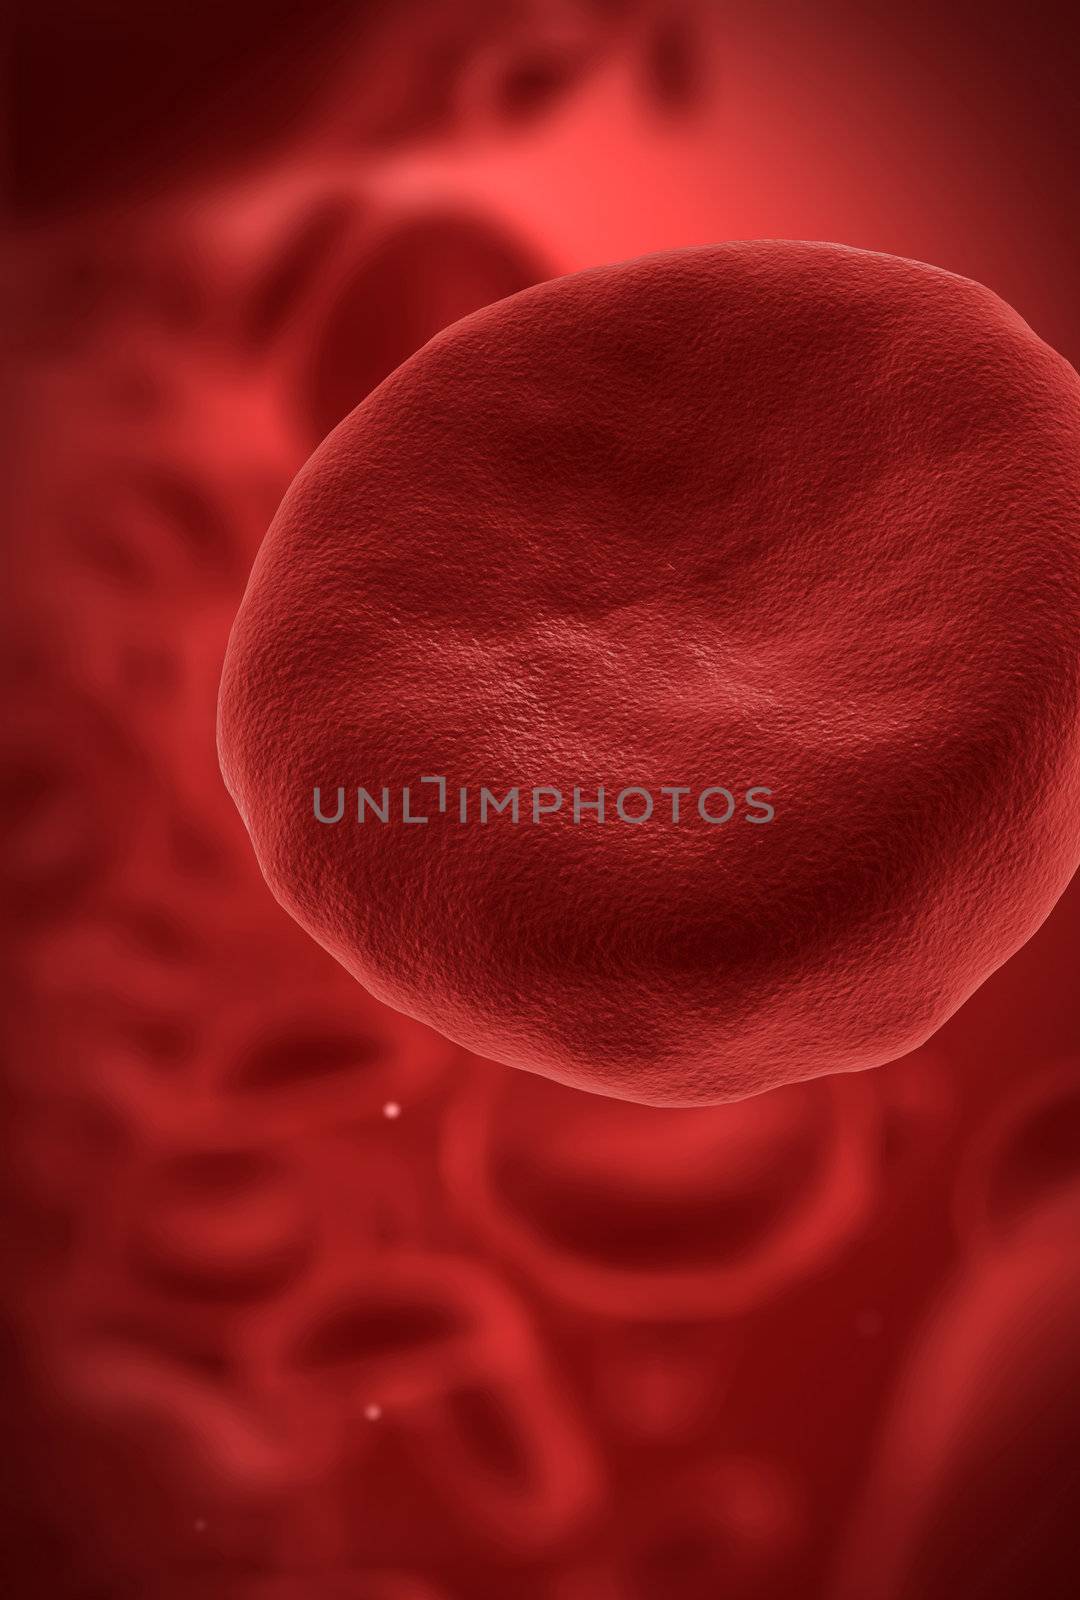 Human blood cell CGI